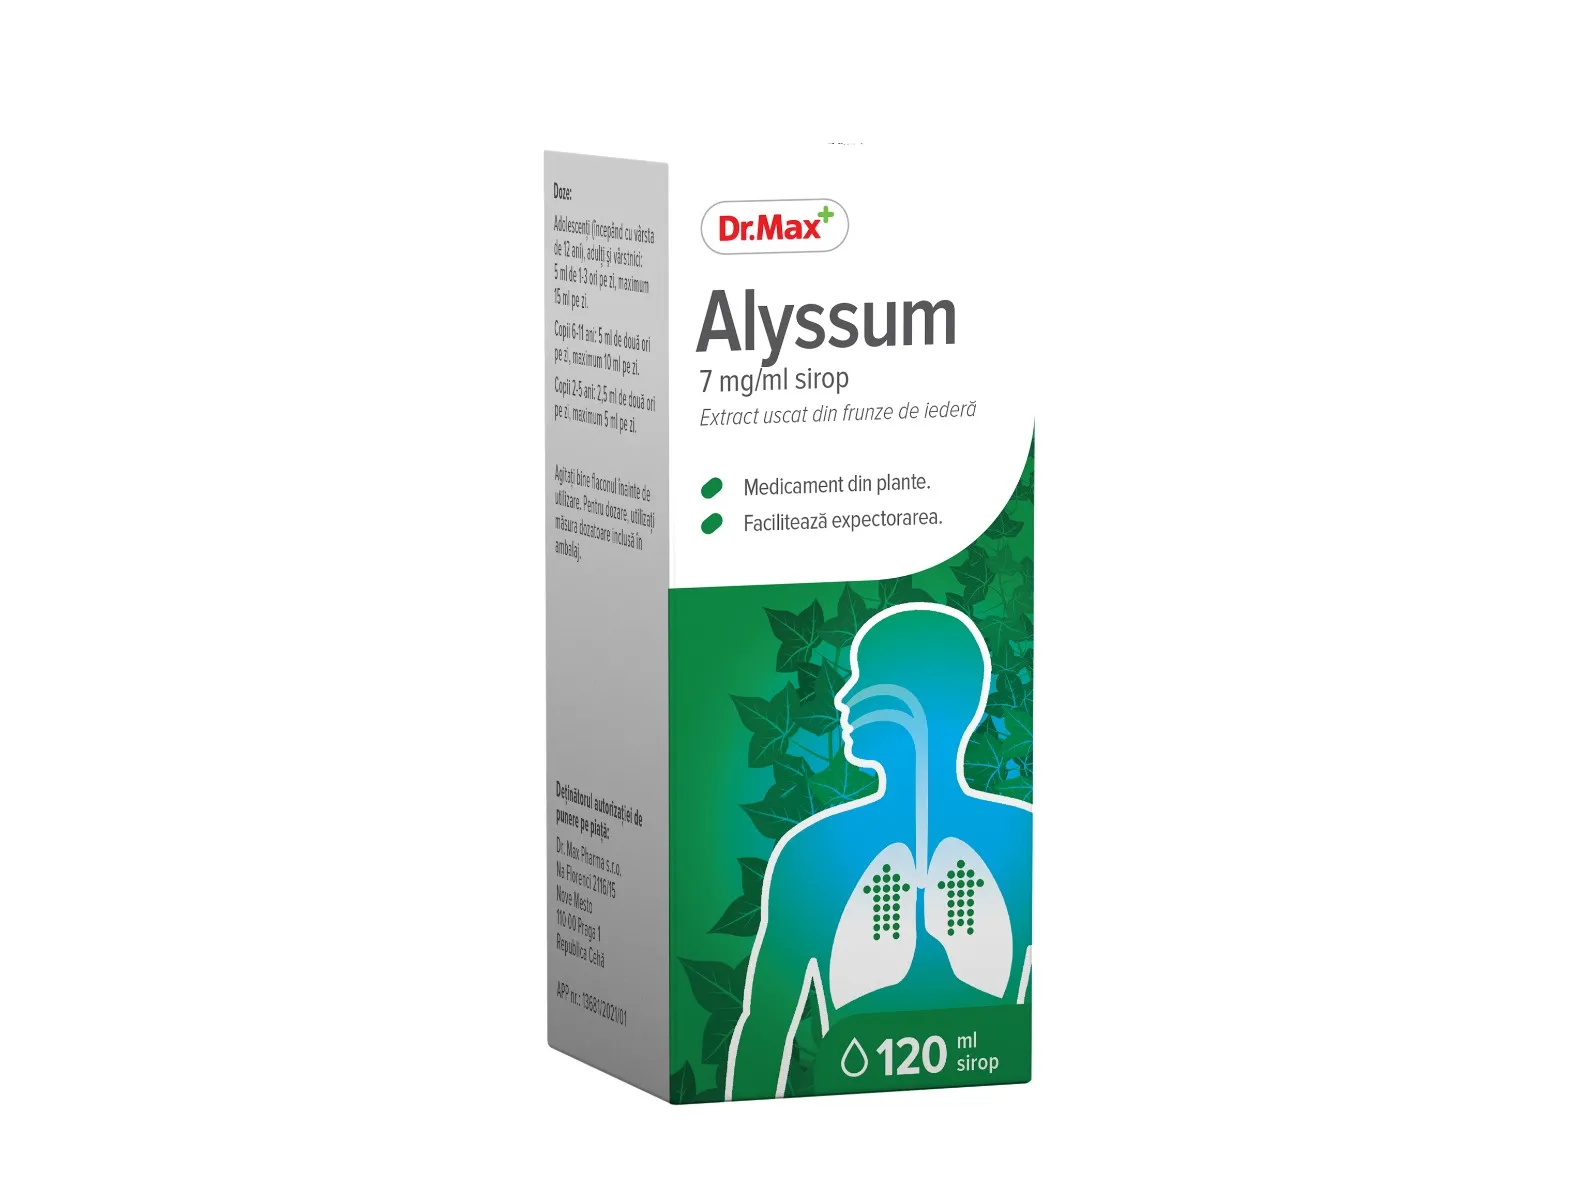 Dr.Max Alyssum 7mg/ml sirop, 120ml